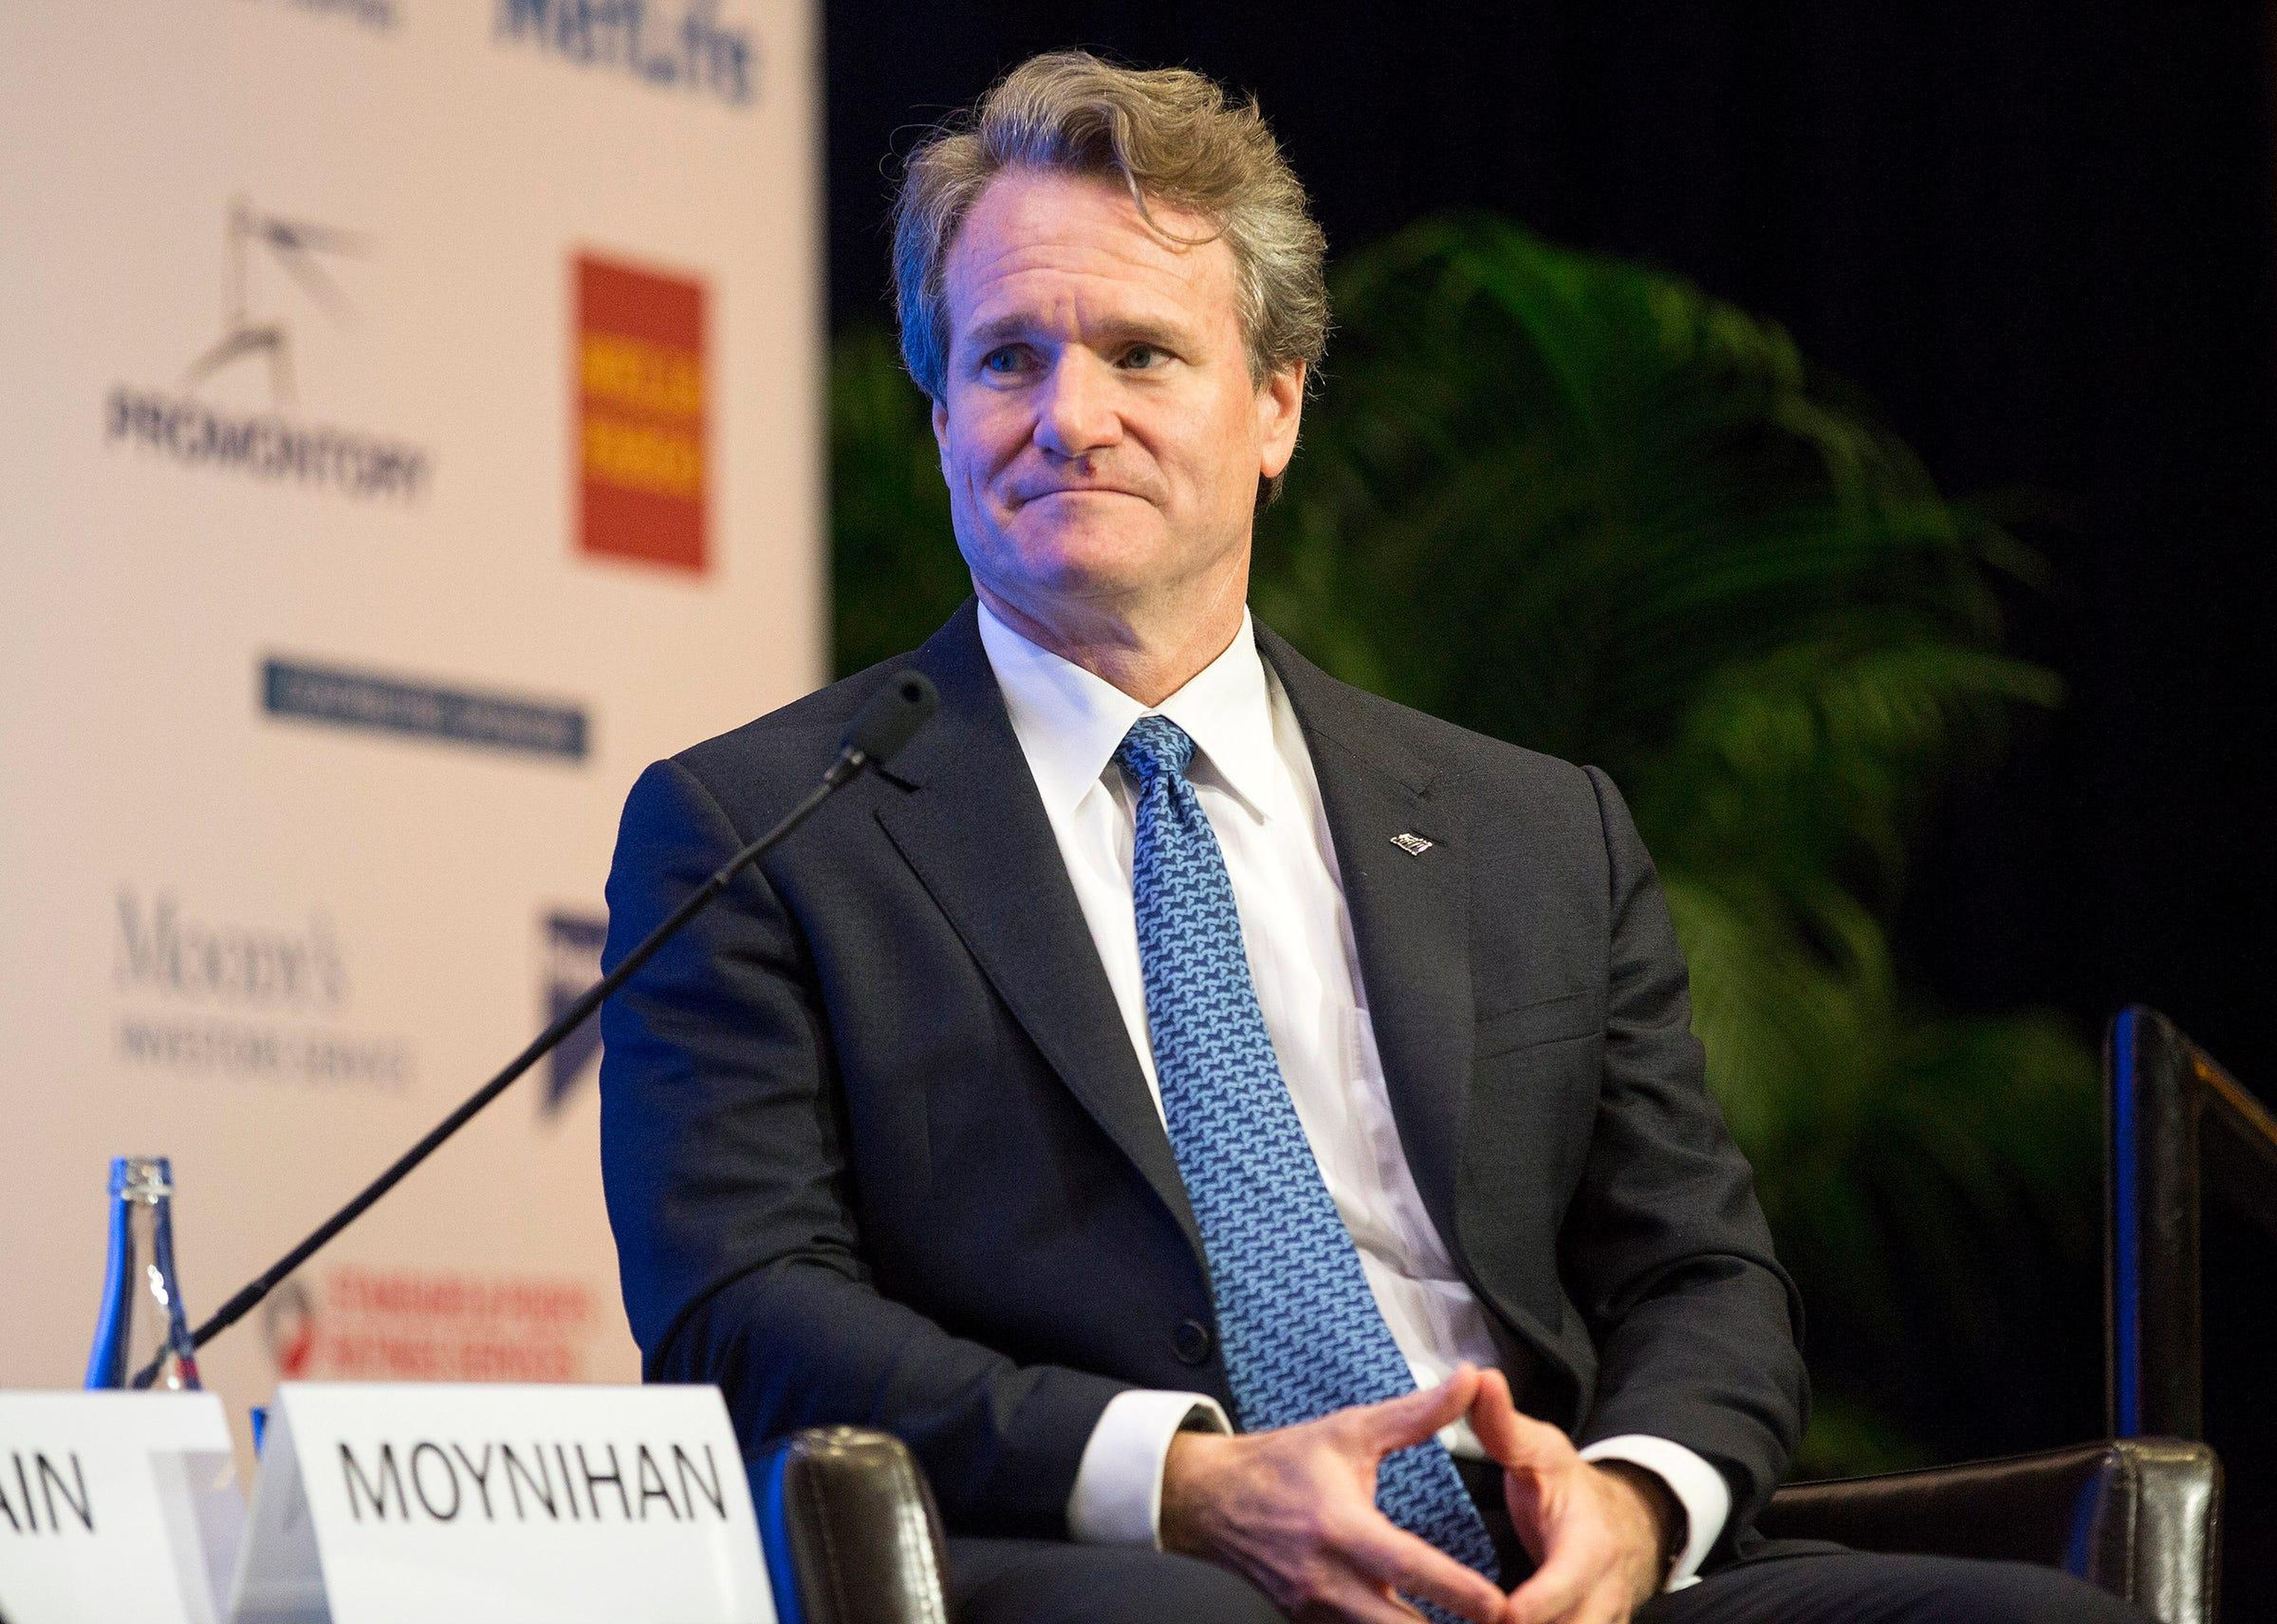 Brian Moynihan, CEO of Bank of America